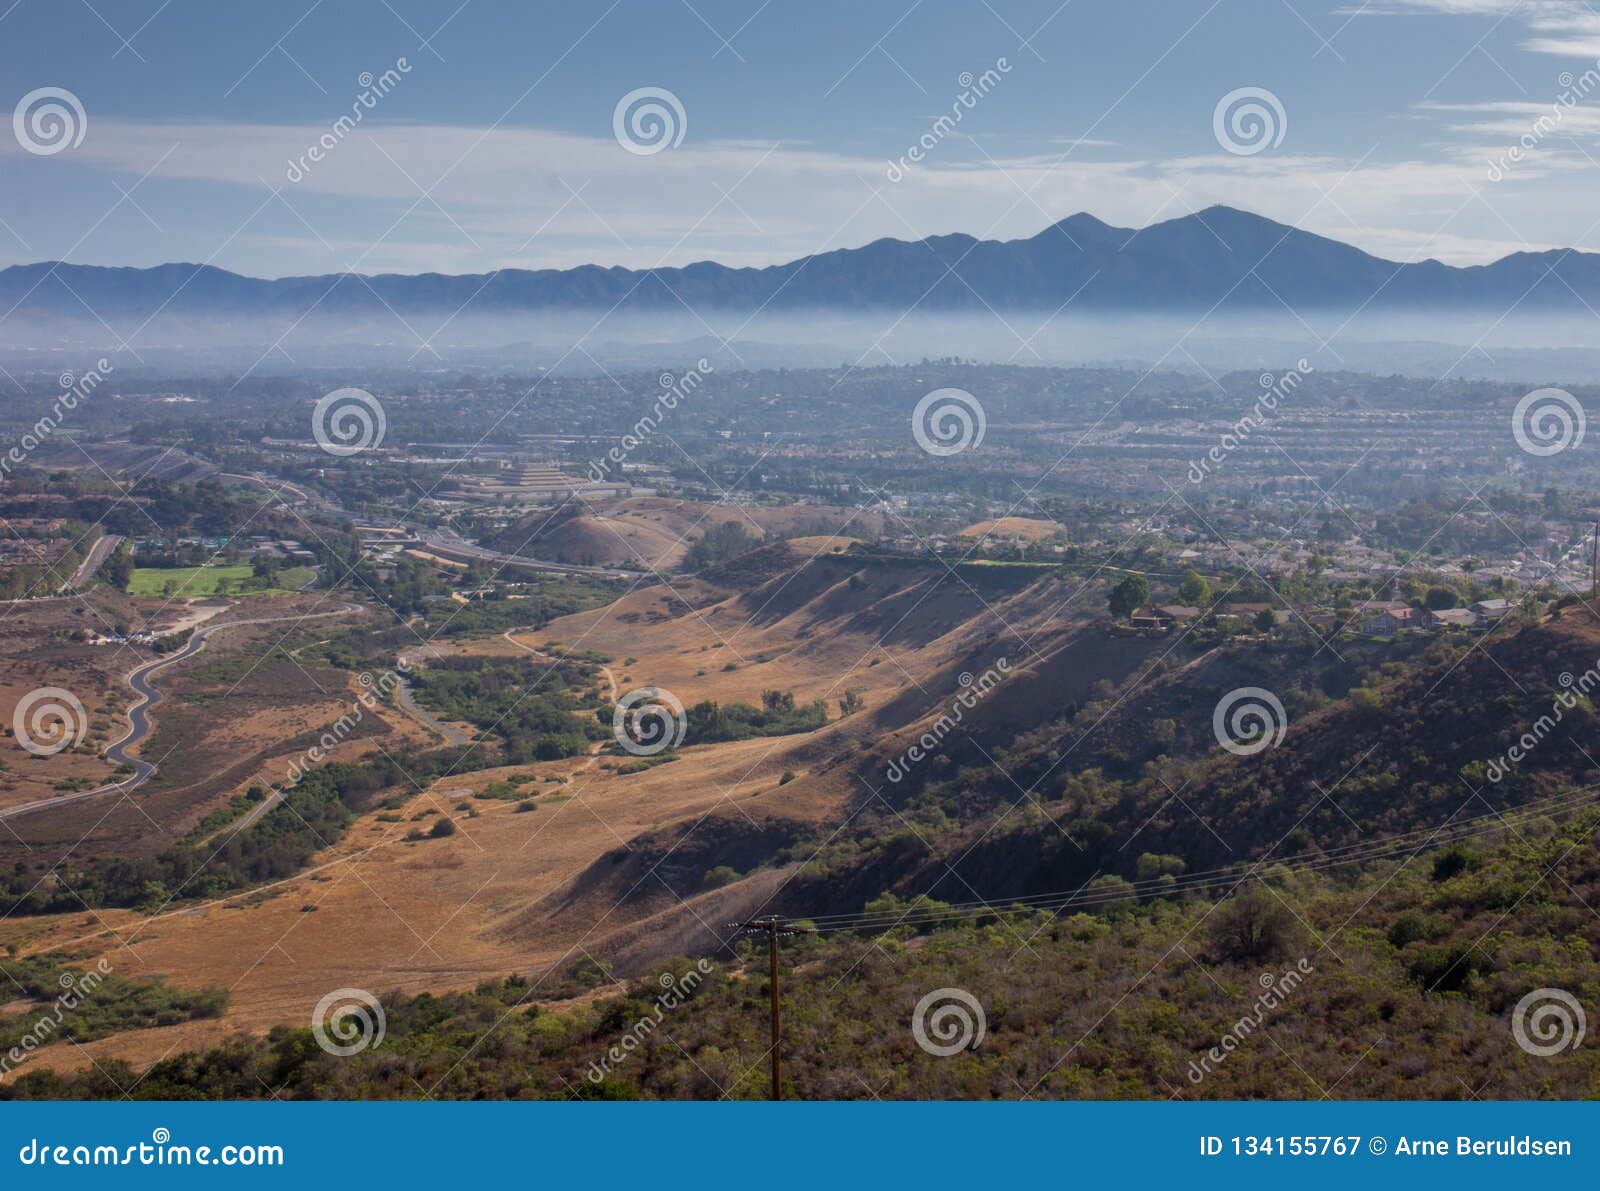 san joaquin hills in southern california